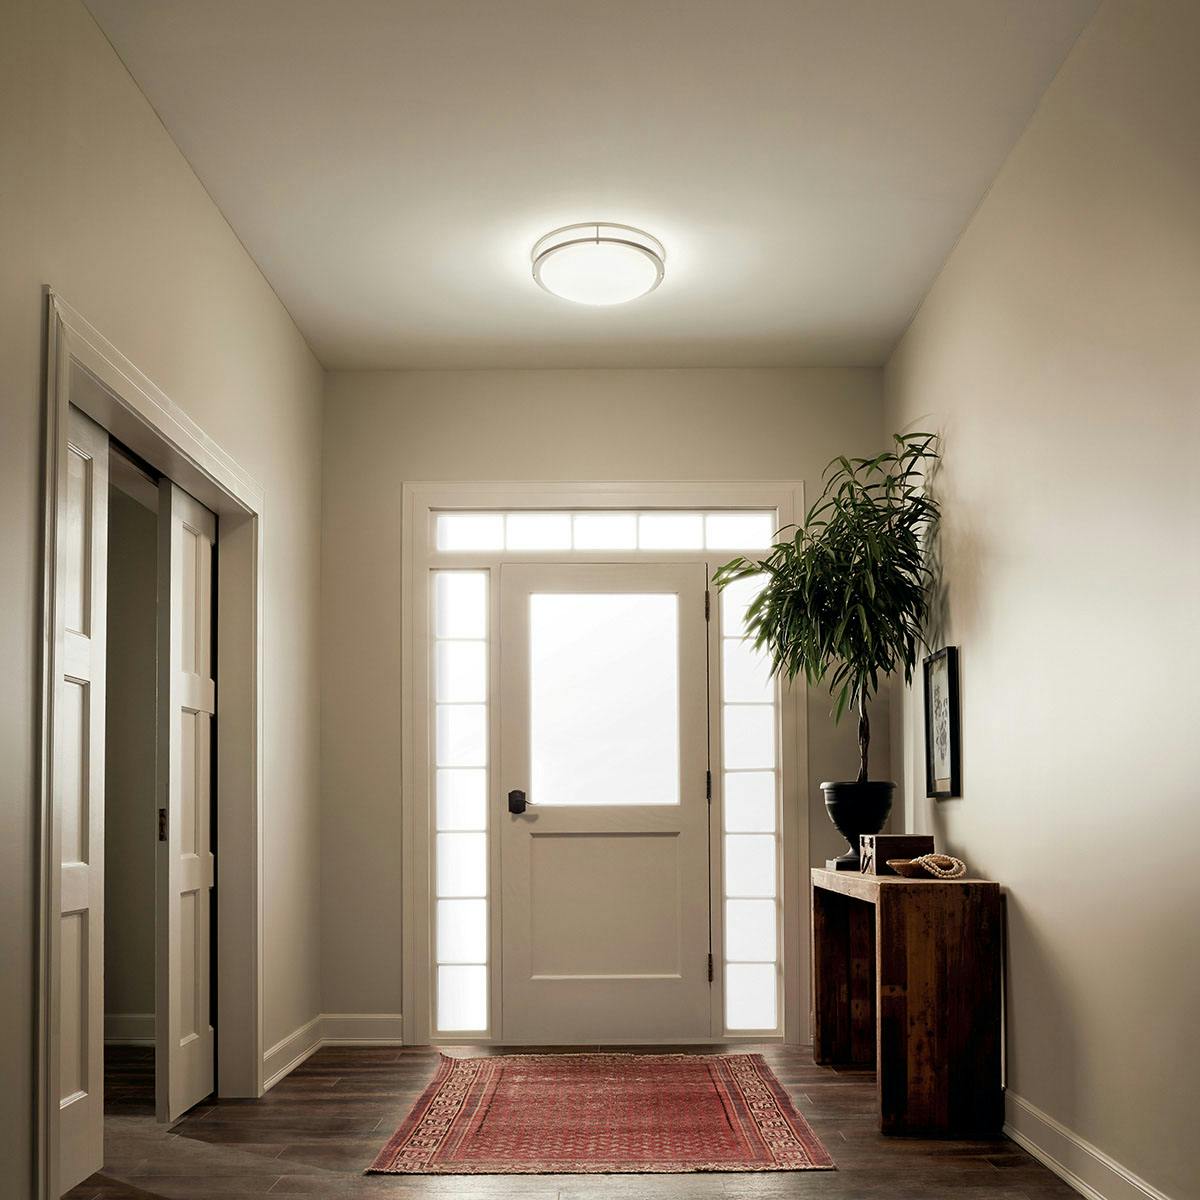 Day time Hallway image featuring Avon flush mount light 10789NILED